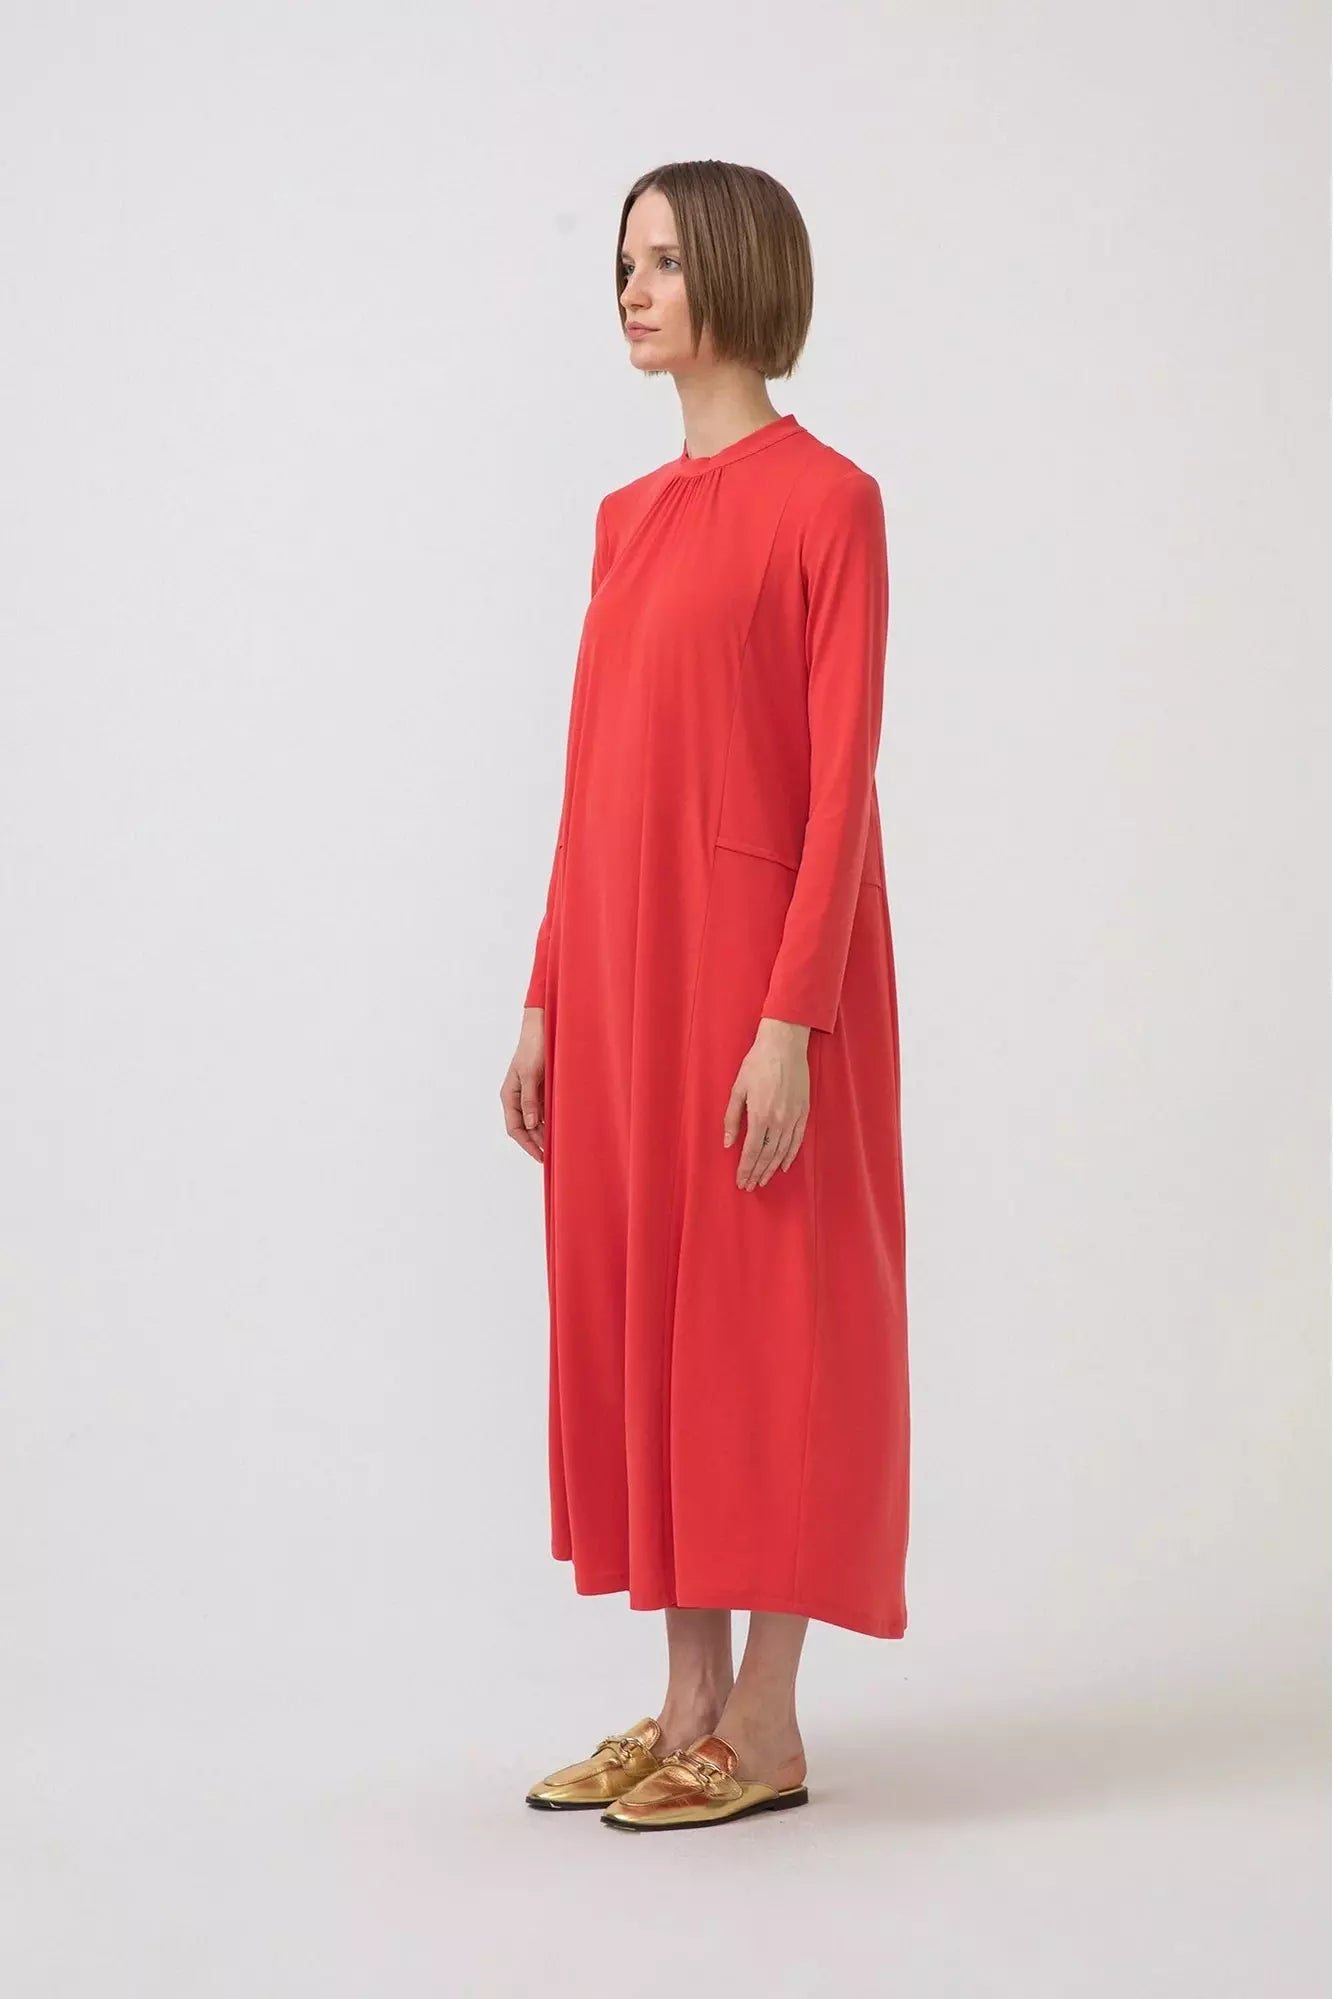 Premium Quality Jersey Dress Dress By Baano   